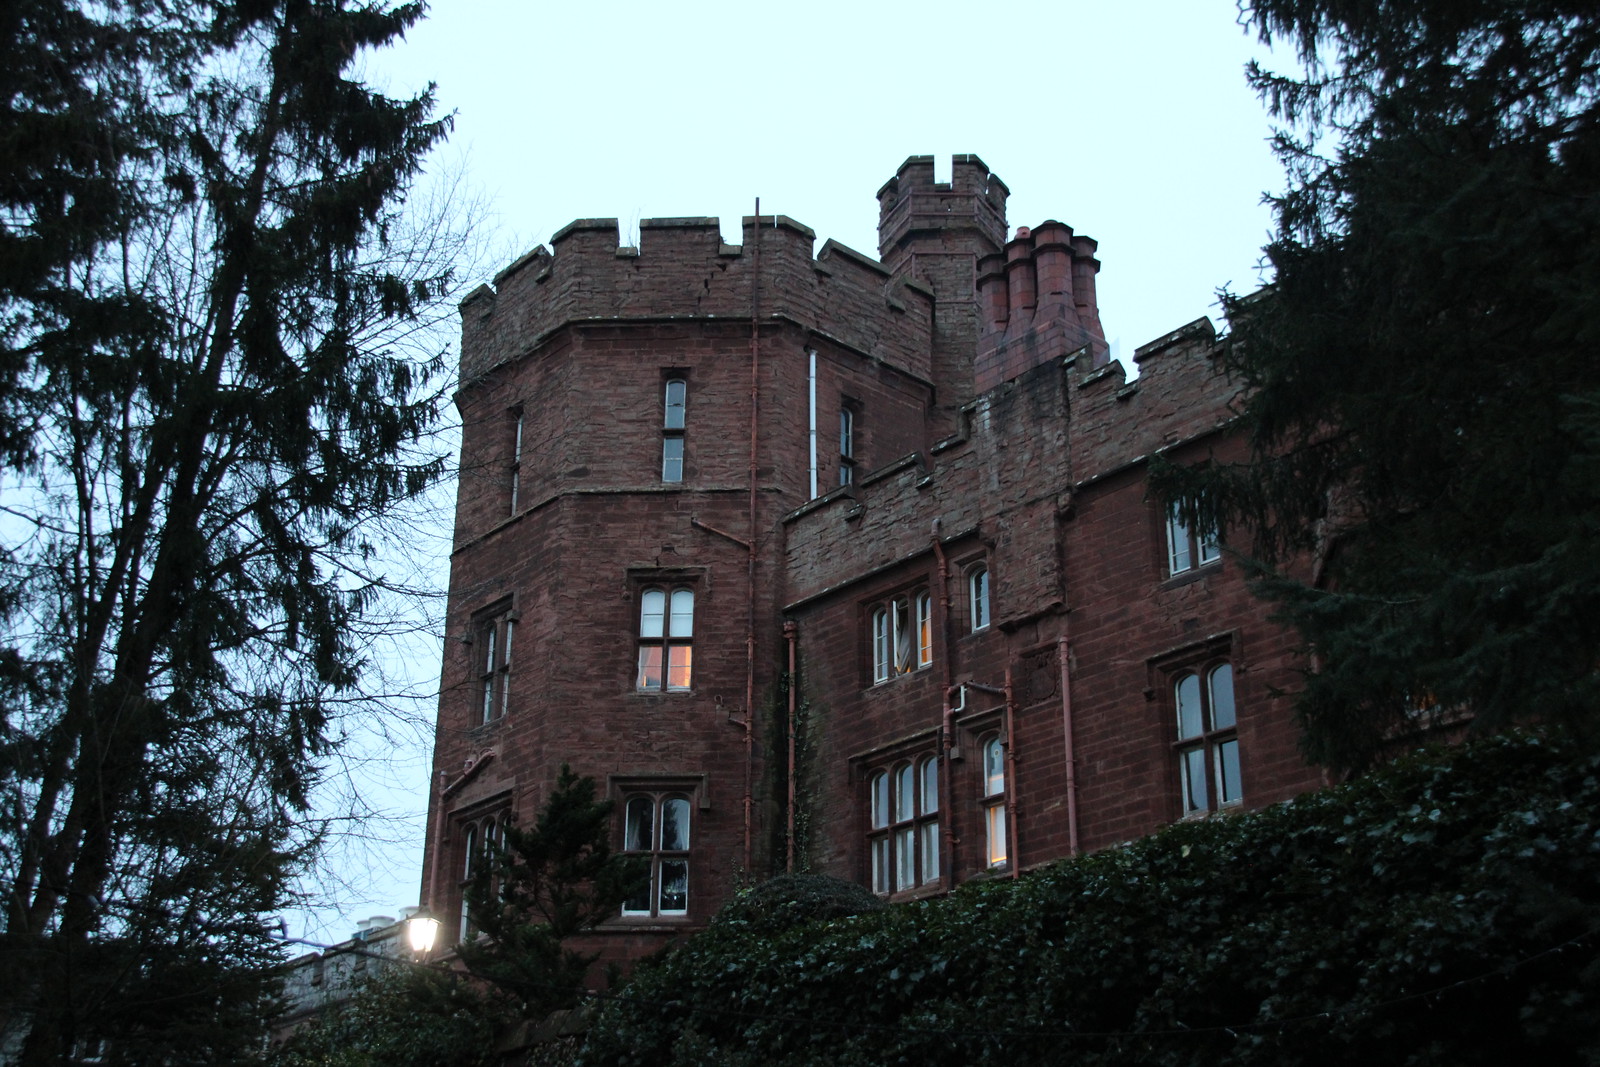 Ruthin Castle Hotel & Spa, Ruthin, Denbighshire, Wales.